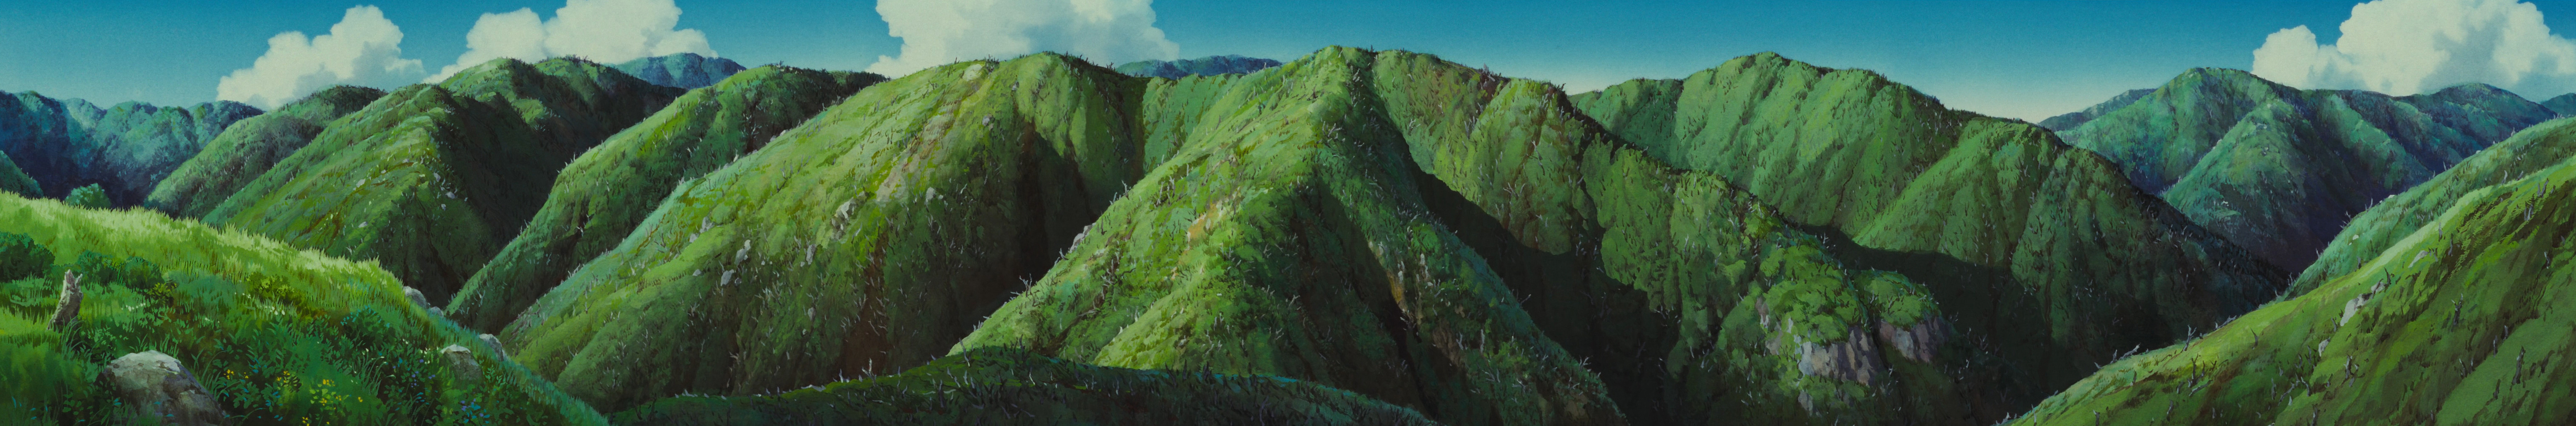 Princess Mononoke Landscape Drawing Panorama Nature Clouds Mountains Grass Wide Screen 6224x1030